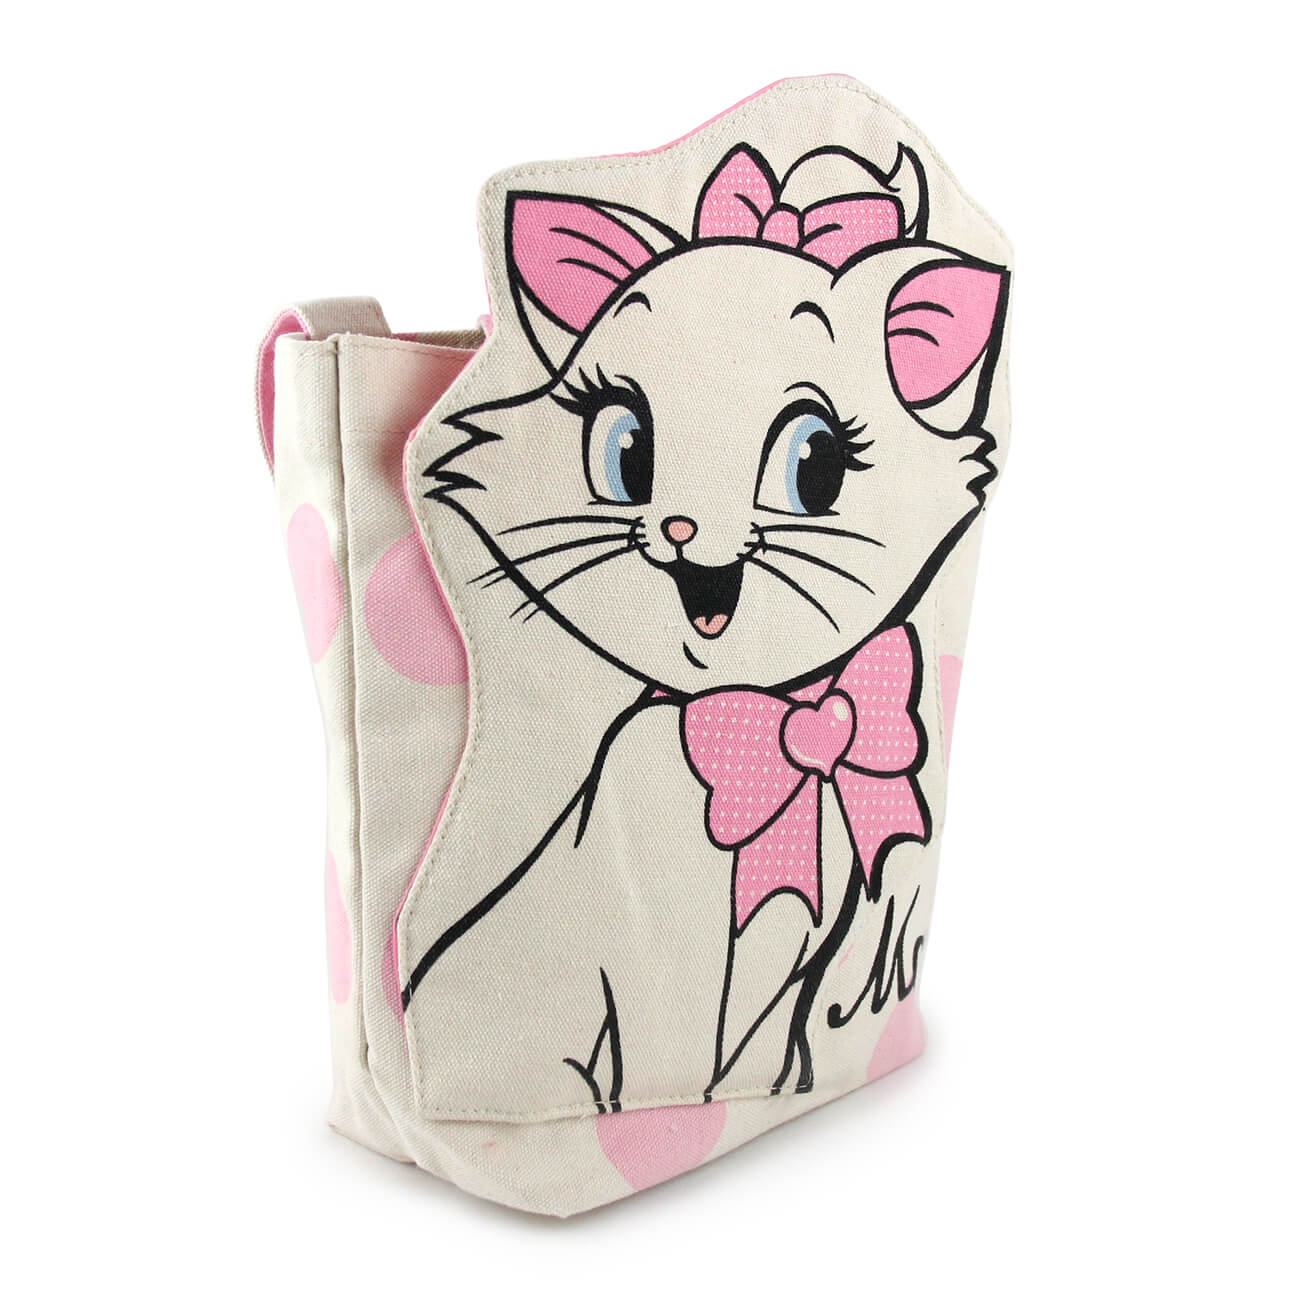 Cute Cat School Lunch Bag for girls